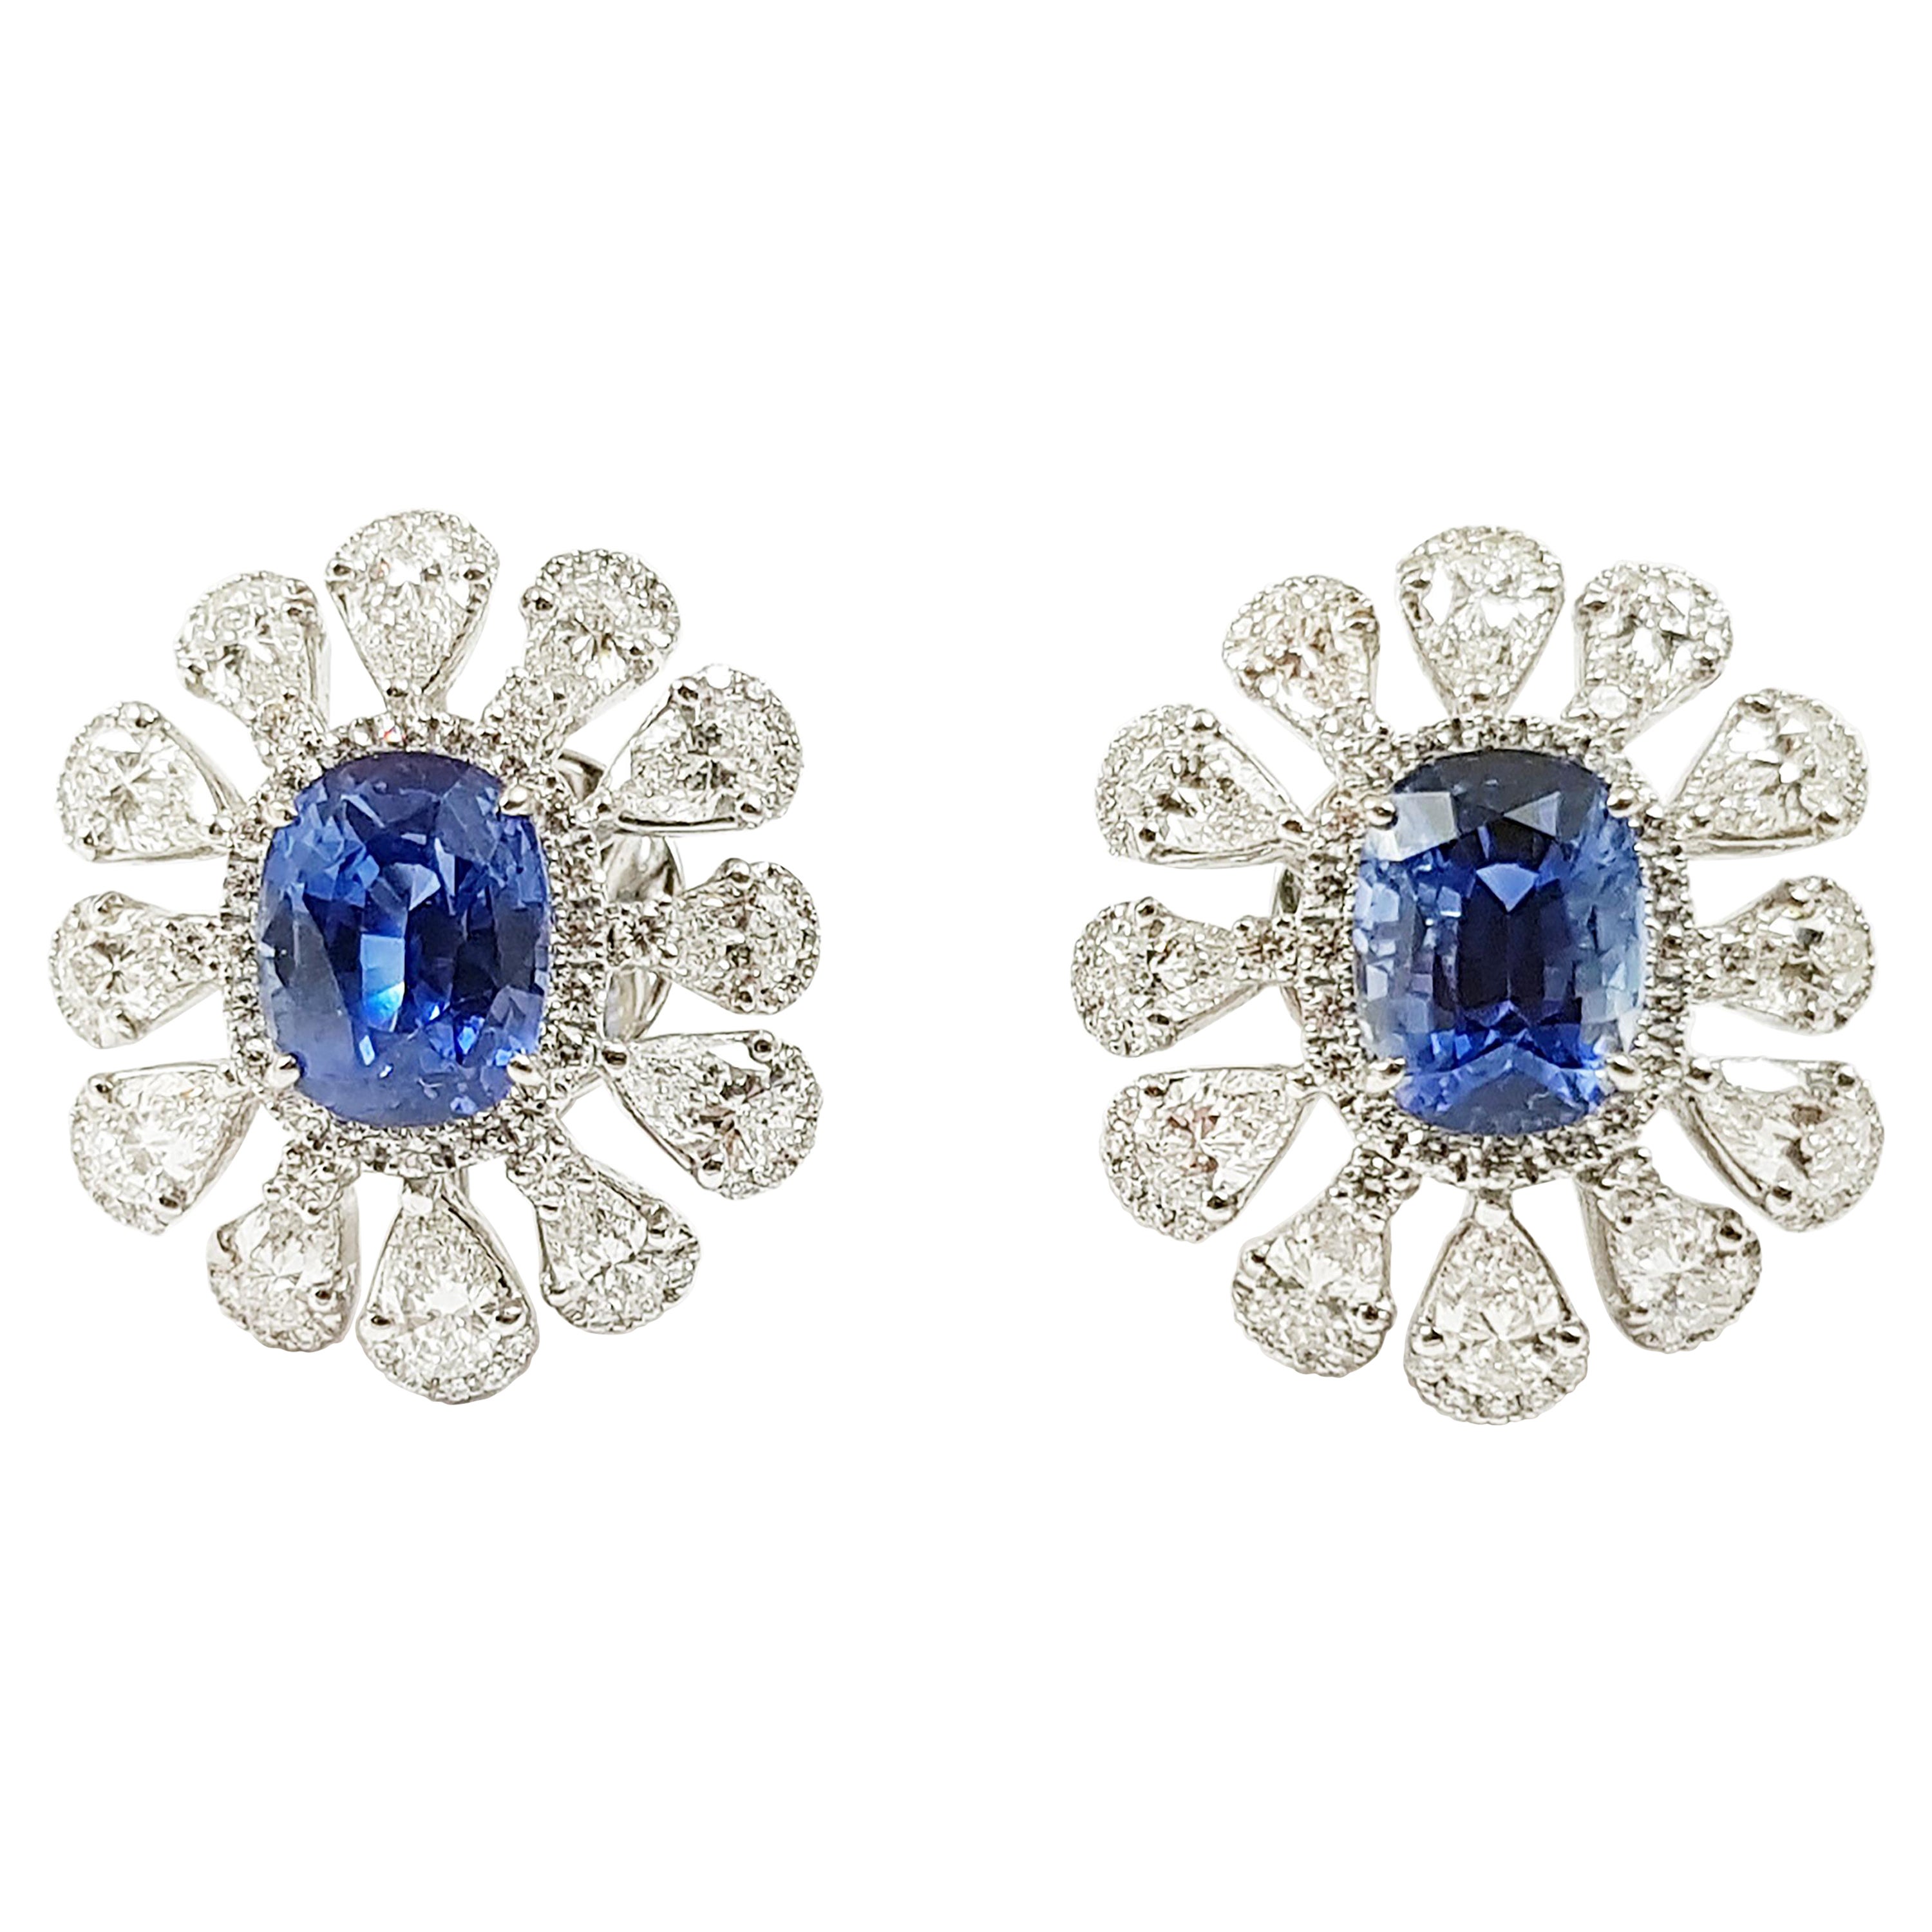 Blue Sapphire with Diamond Earrings set in Platinum 950 Settings